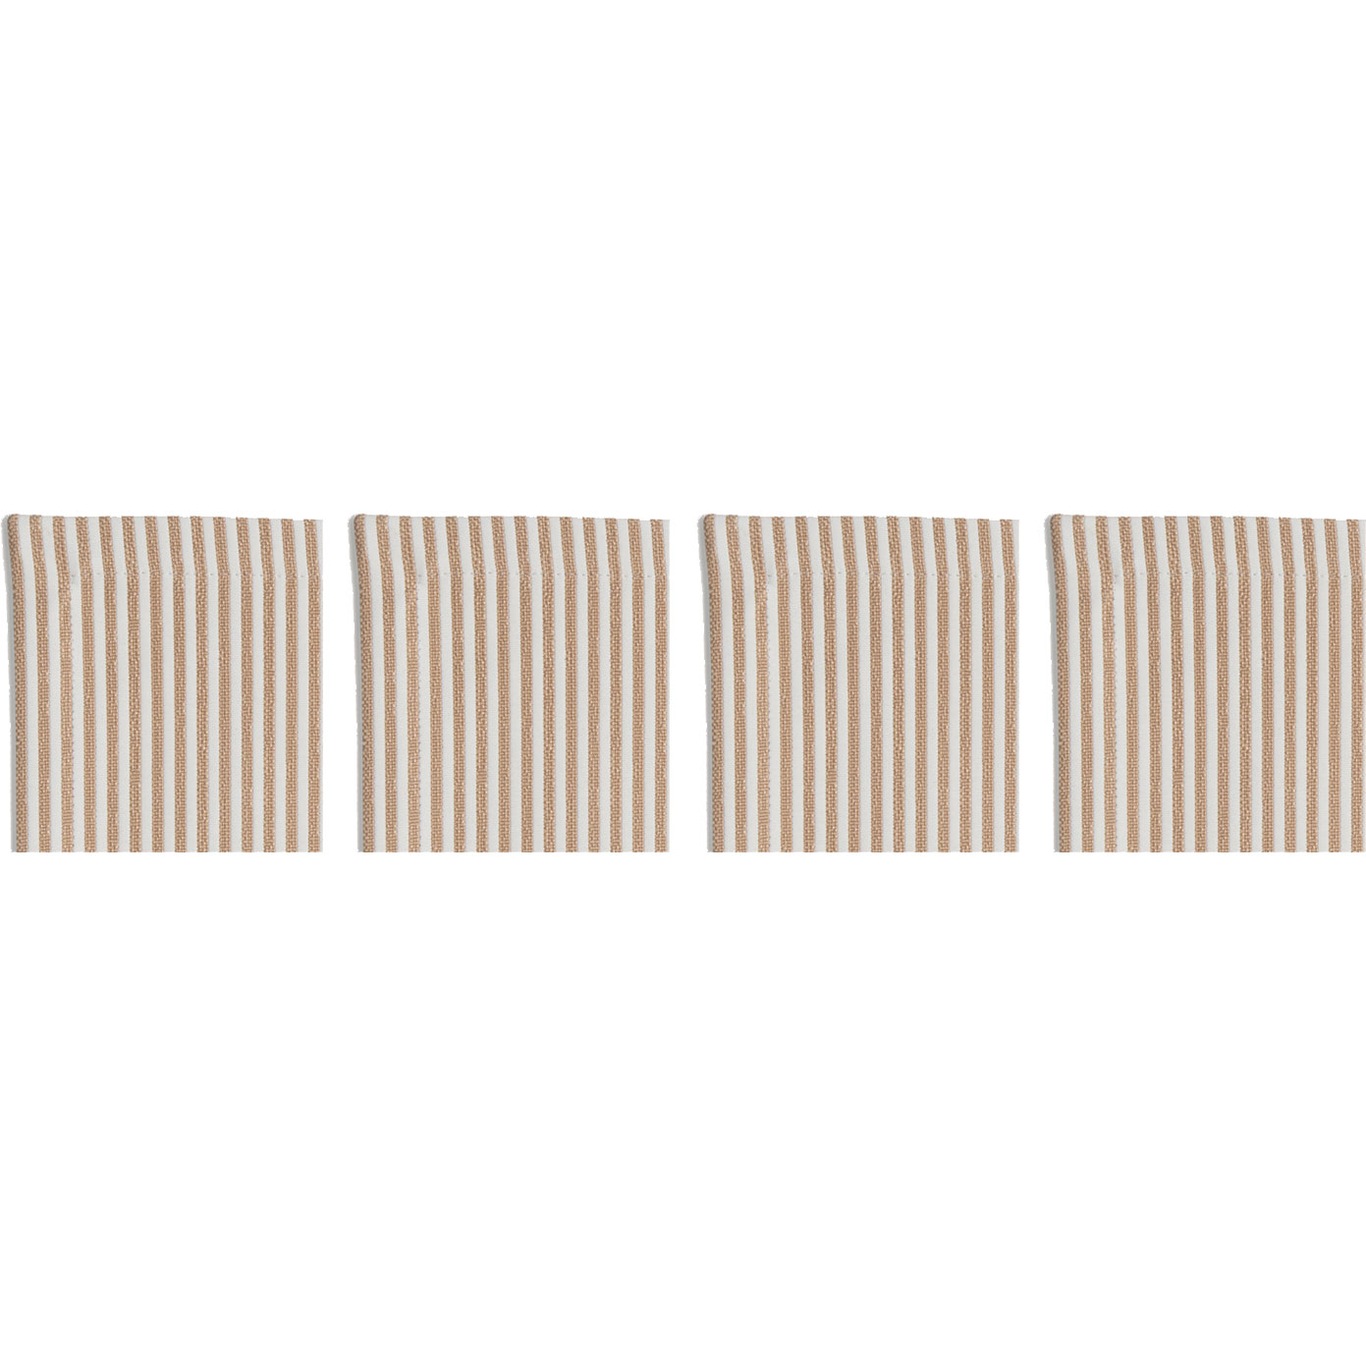 Narrow Stripe Coasters 10x10 cm 4-pack, Beige